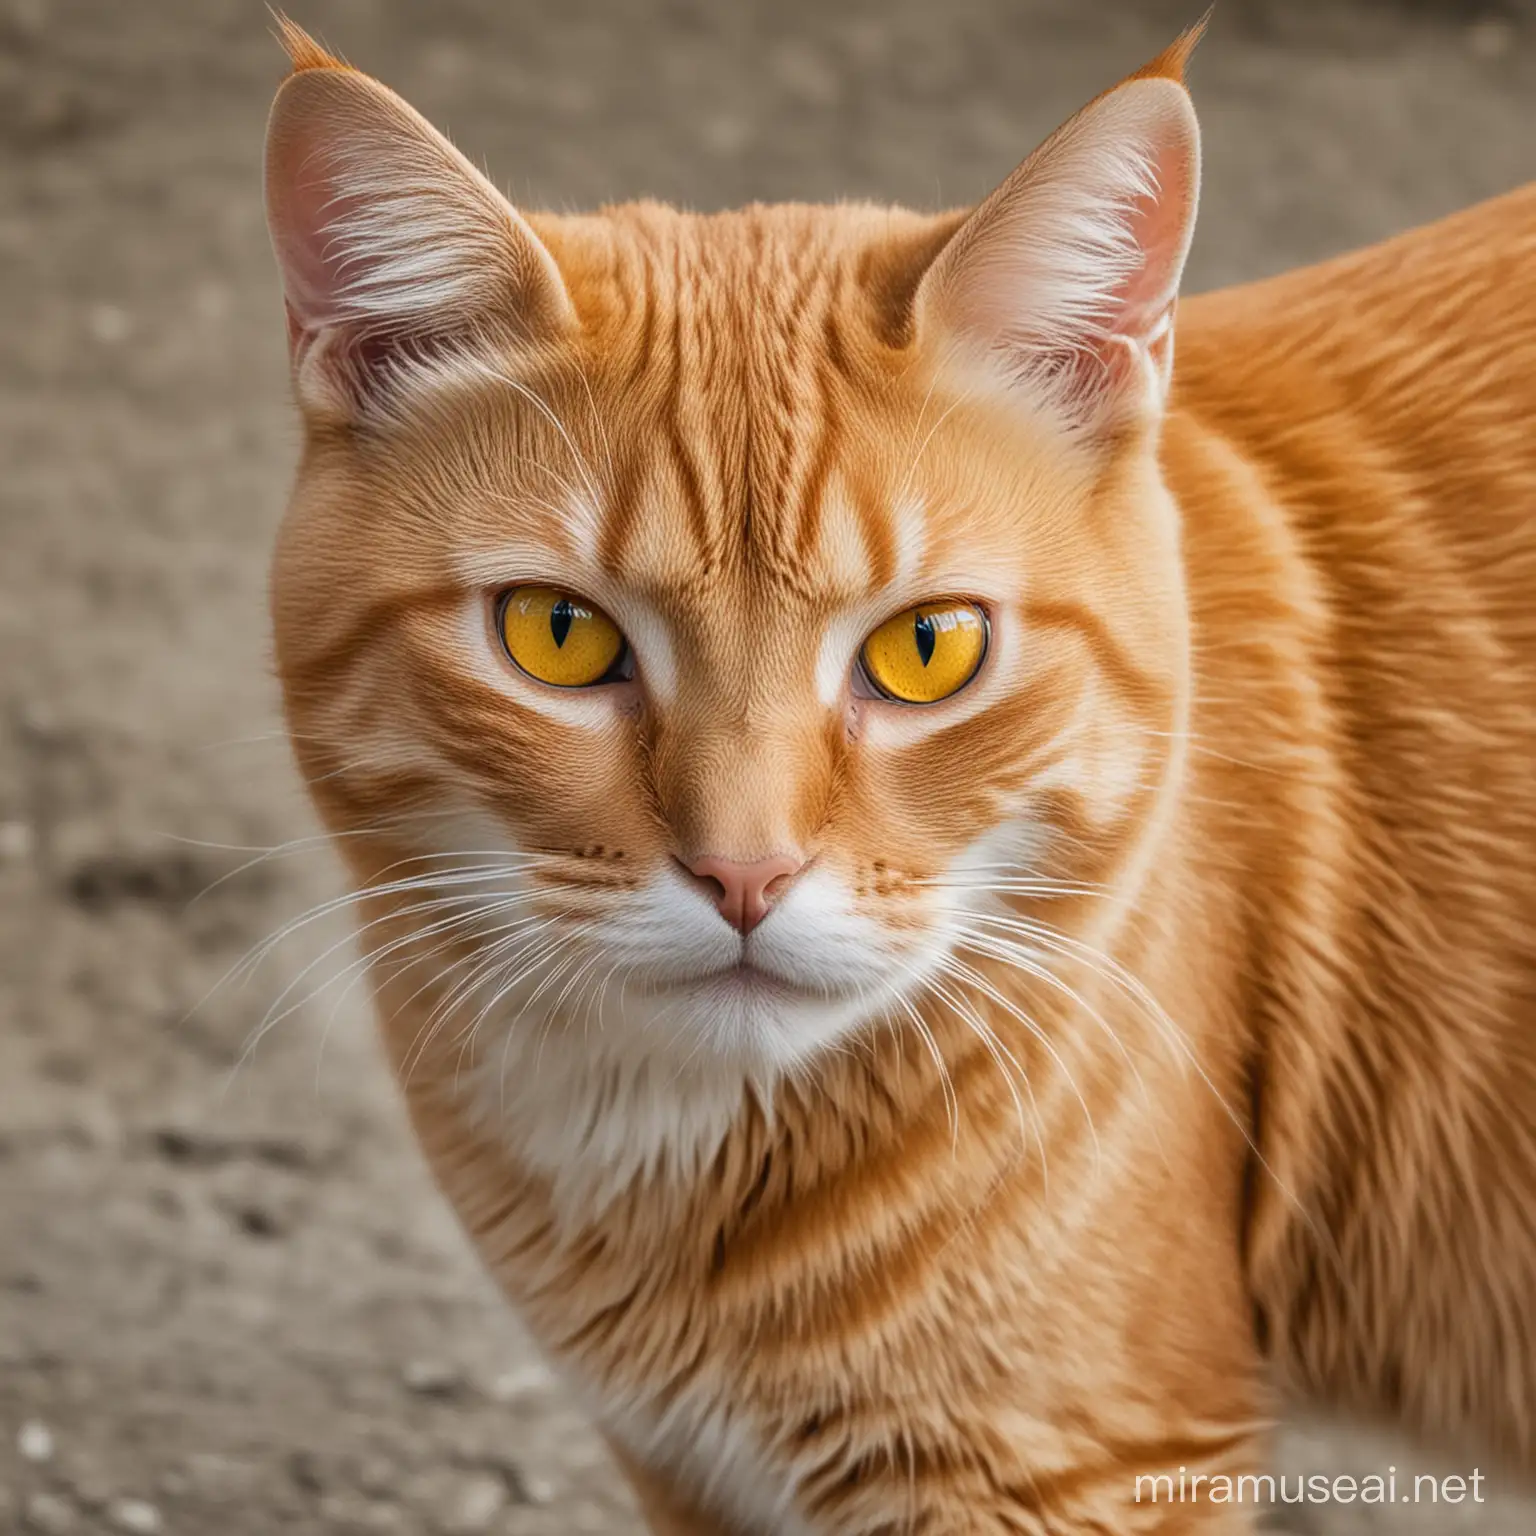 Playful Orange Cat with Piercing Yellow Eyes